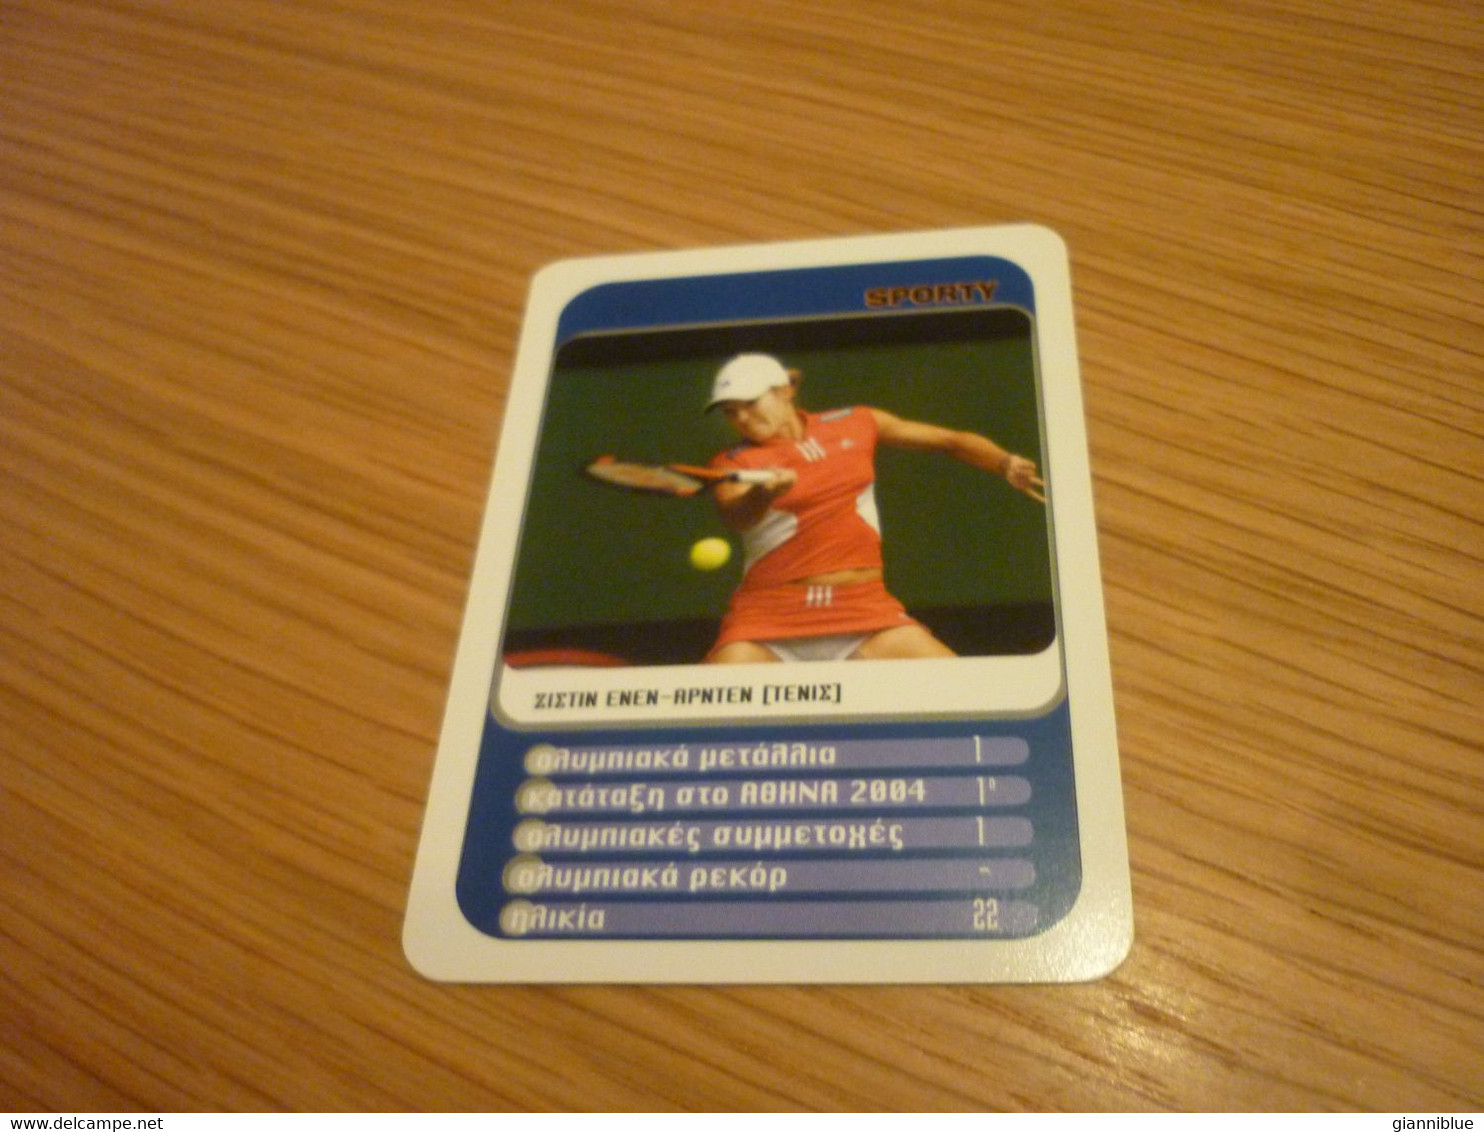 Justine Henin-Hardenne Rookie Belgian Tennis Player Athens 2004 Olympic Games Medalist Greece Greek Trading Card - Tarjetas